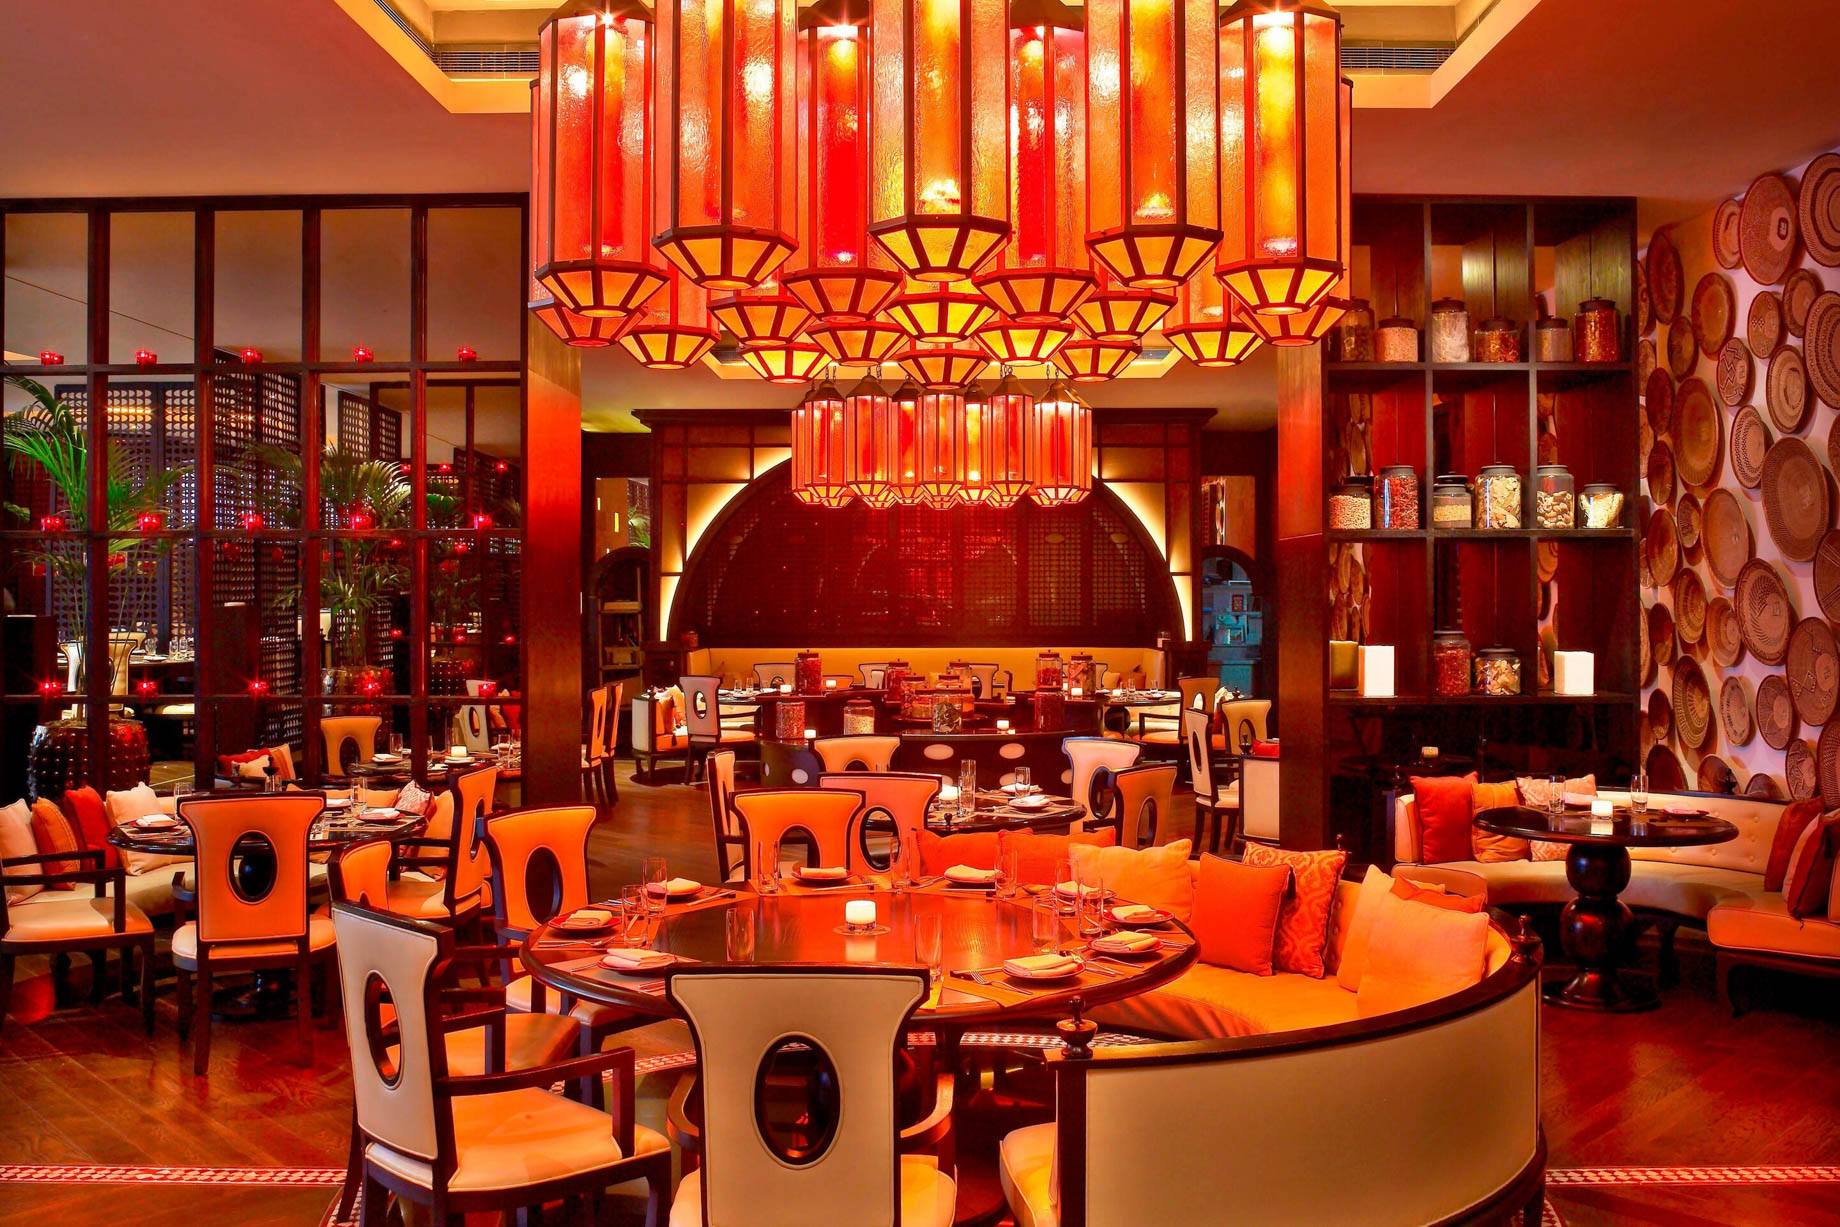 W Doha Hotel – Doha, Qatar – Spice Market Restaurant Tables